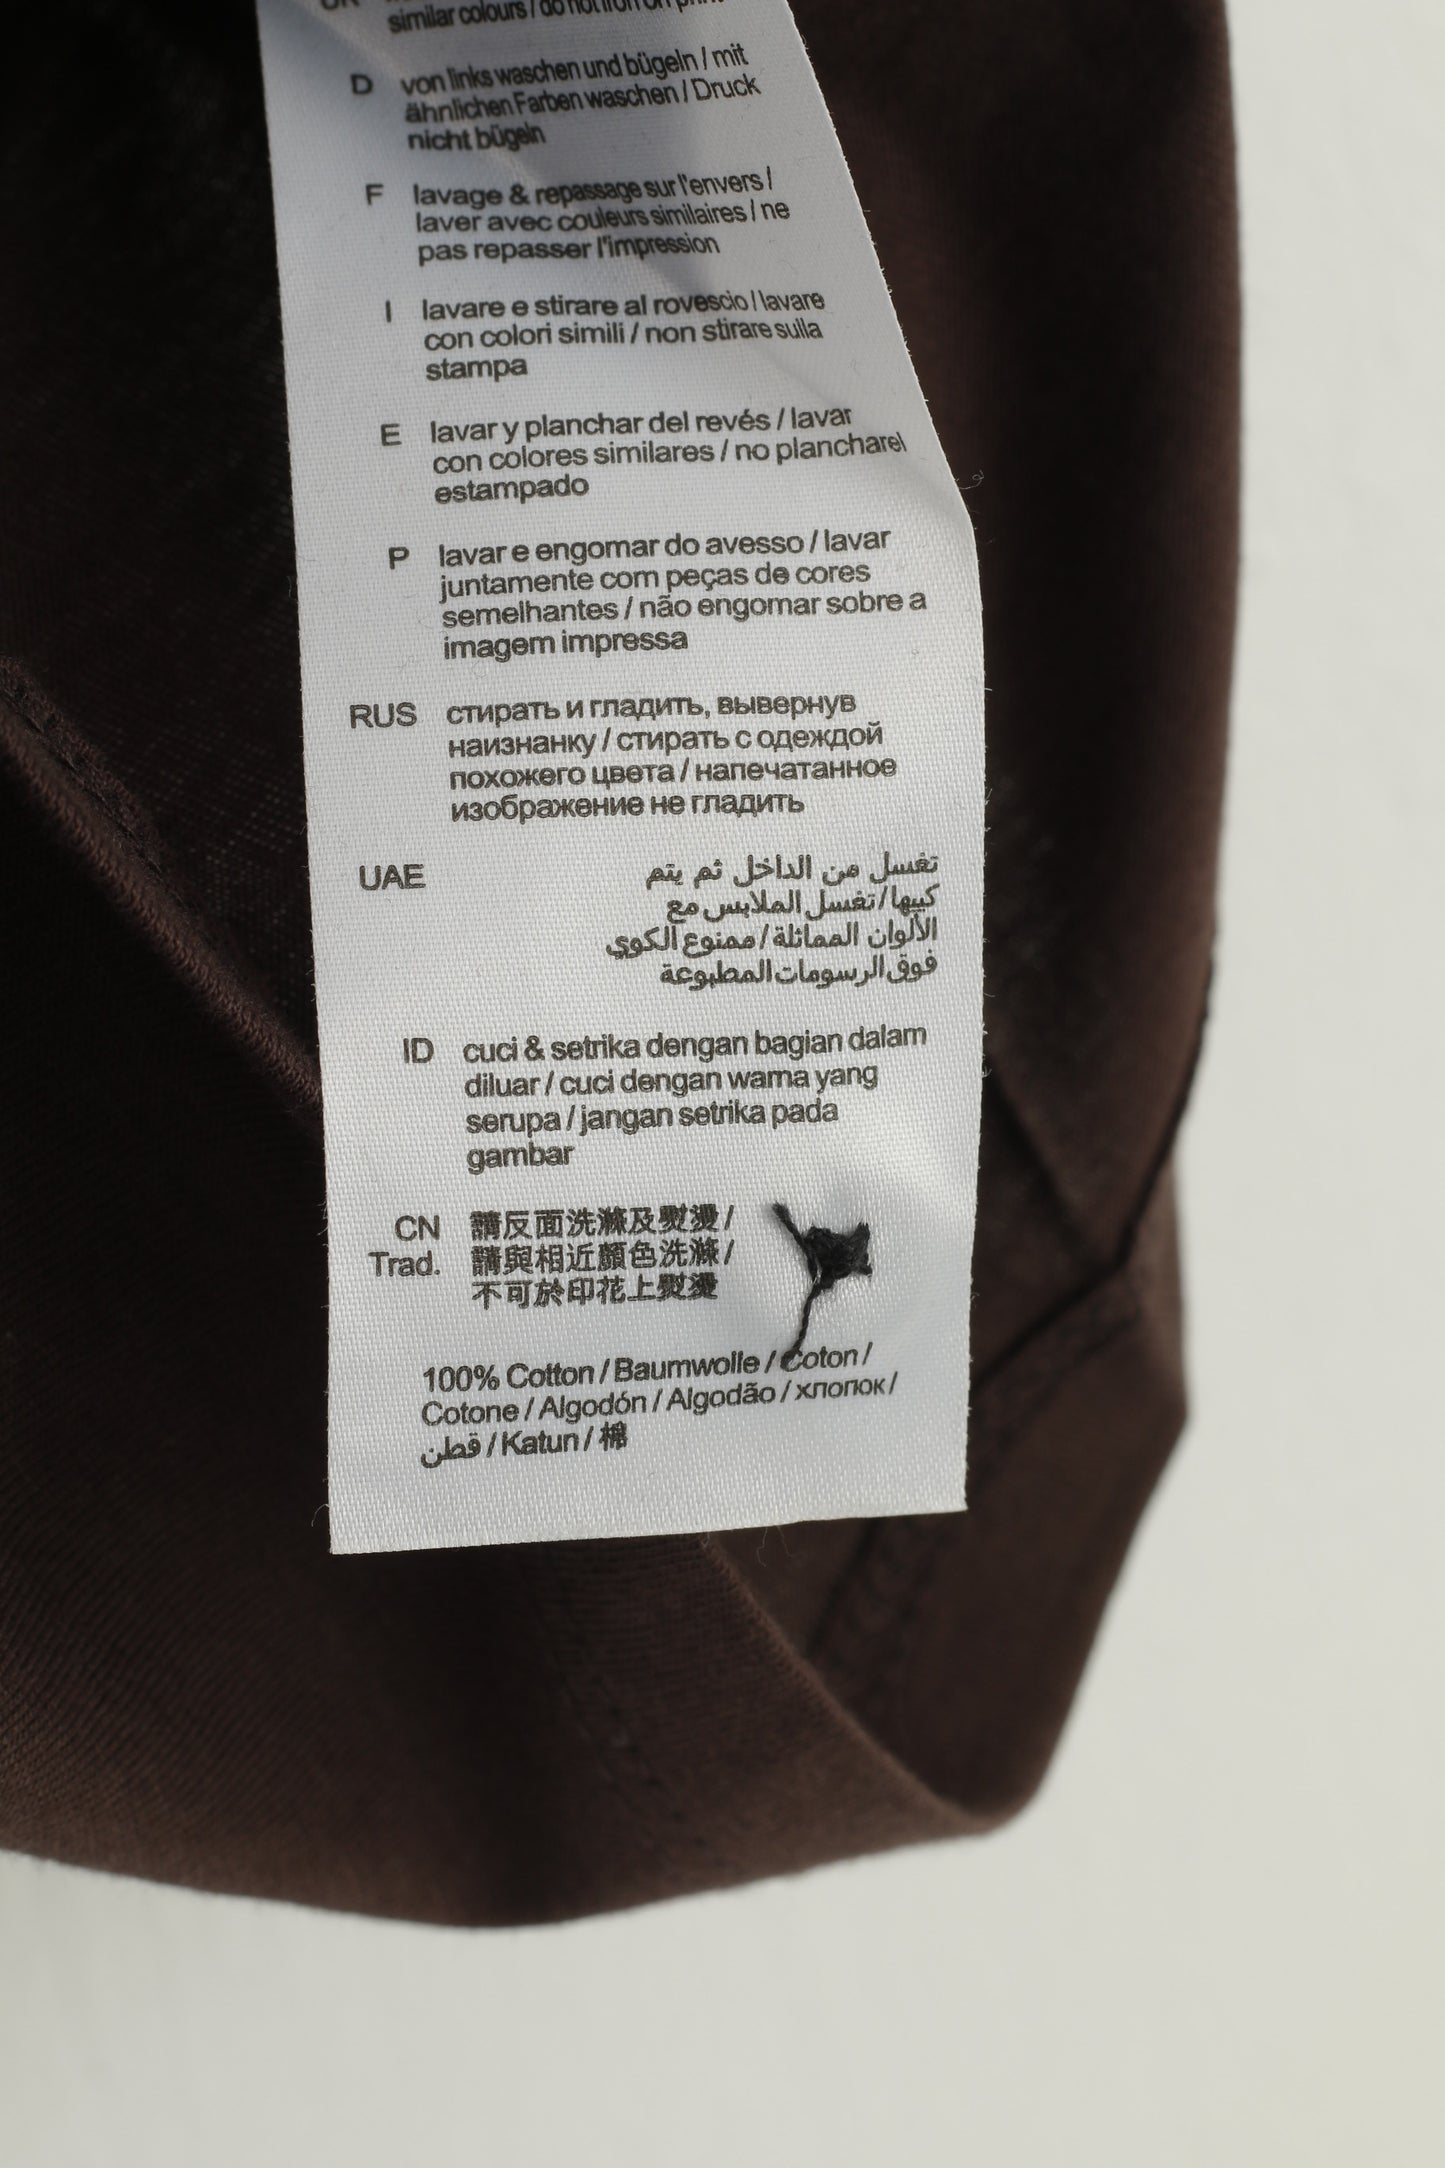 Esprit Men XL Polo Shirt Brown Checkered Cotton Detailed Buttons Classic Collar Vintage Short Sleeve  Top